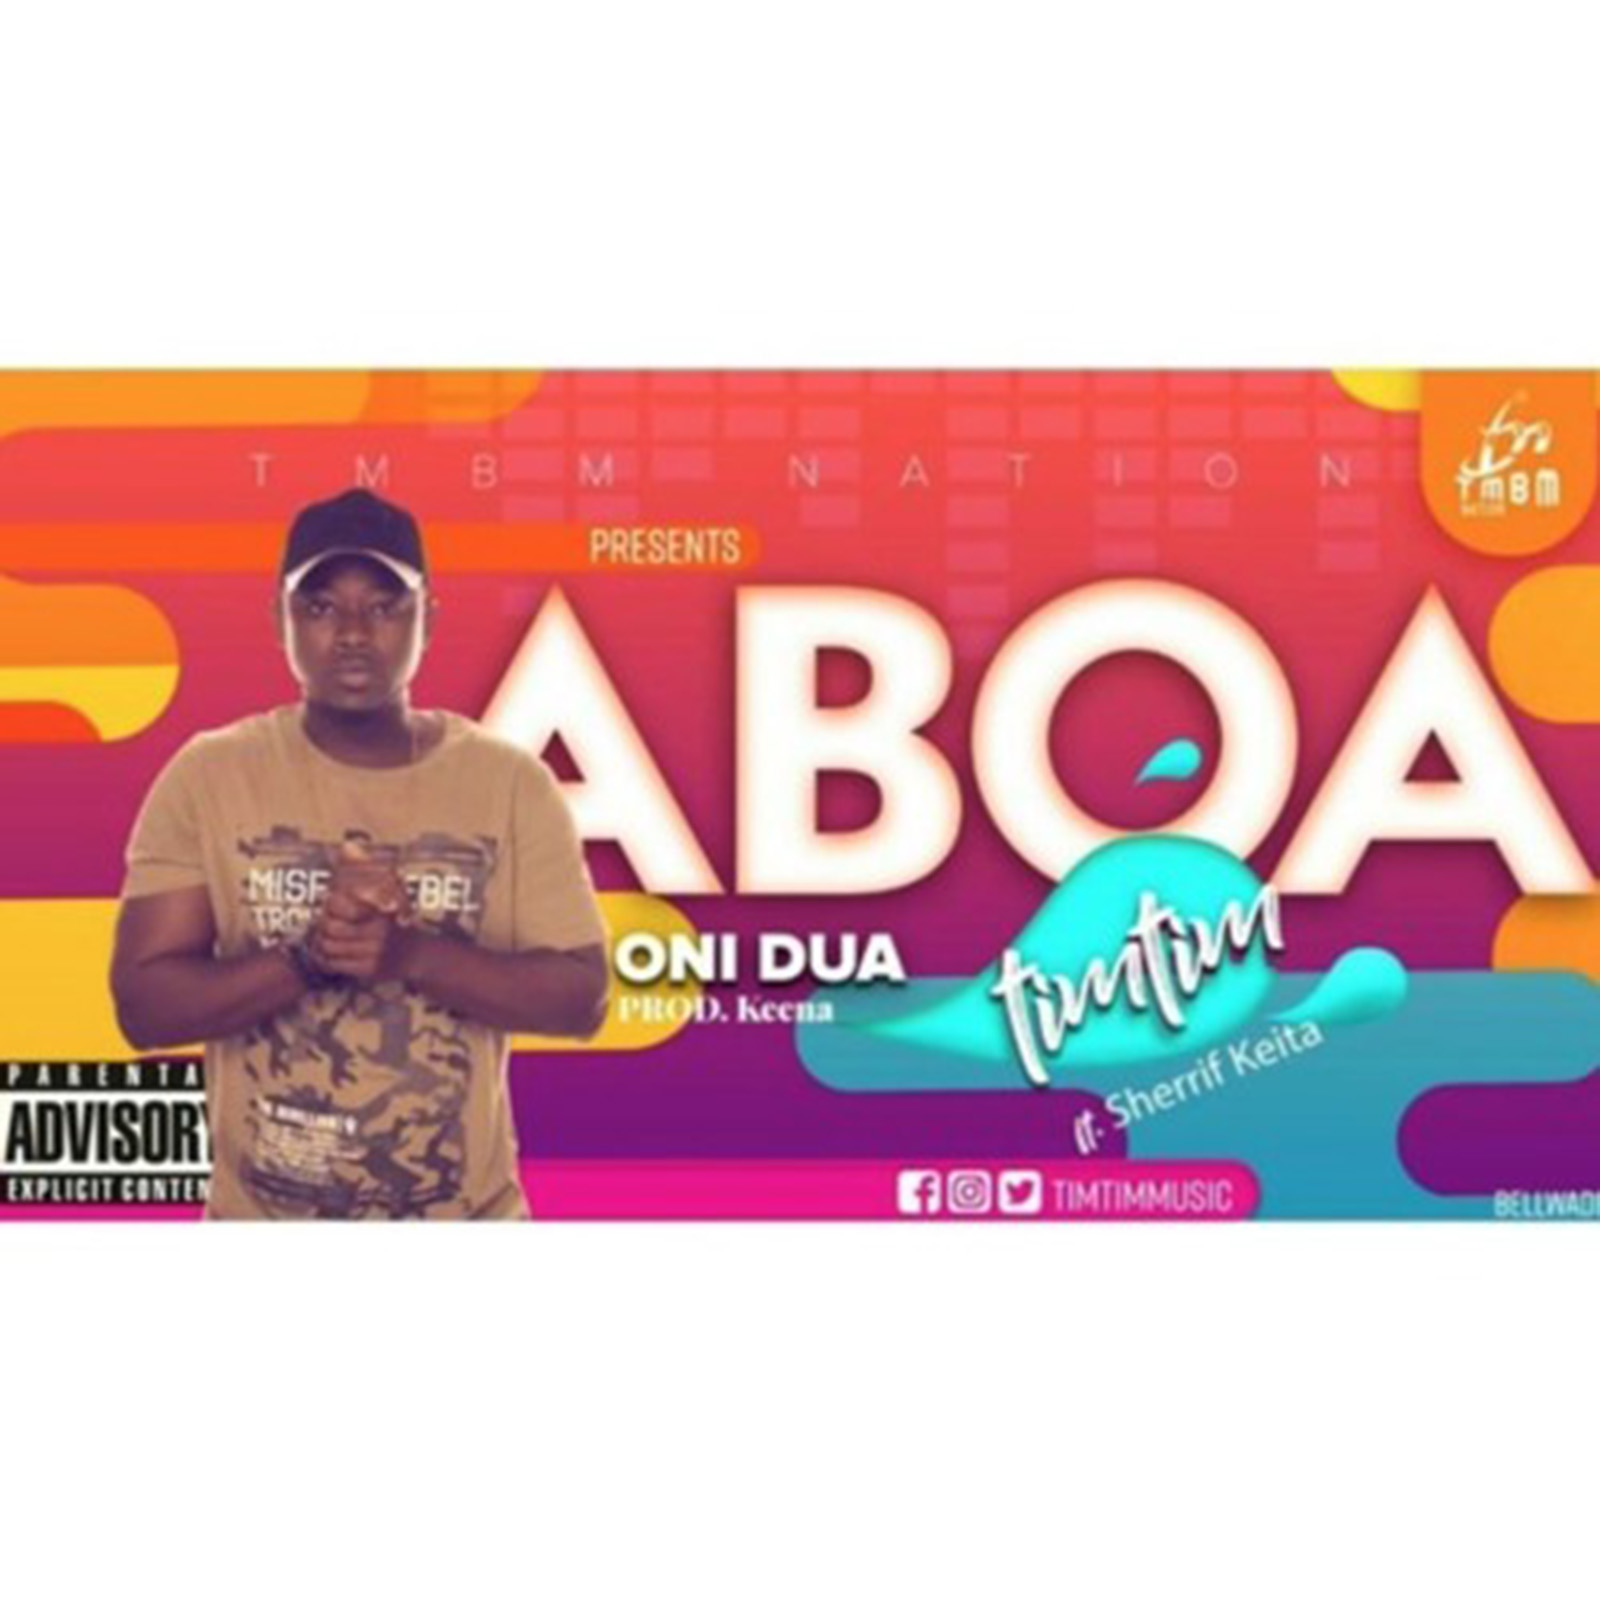 Aboa Oni Dua by Tim Tim feat. Sherif Keita